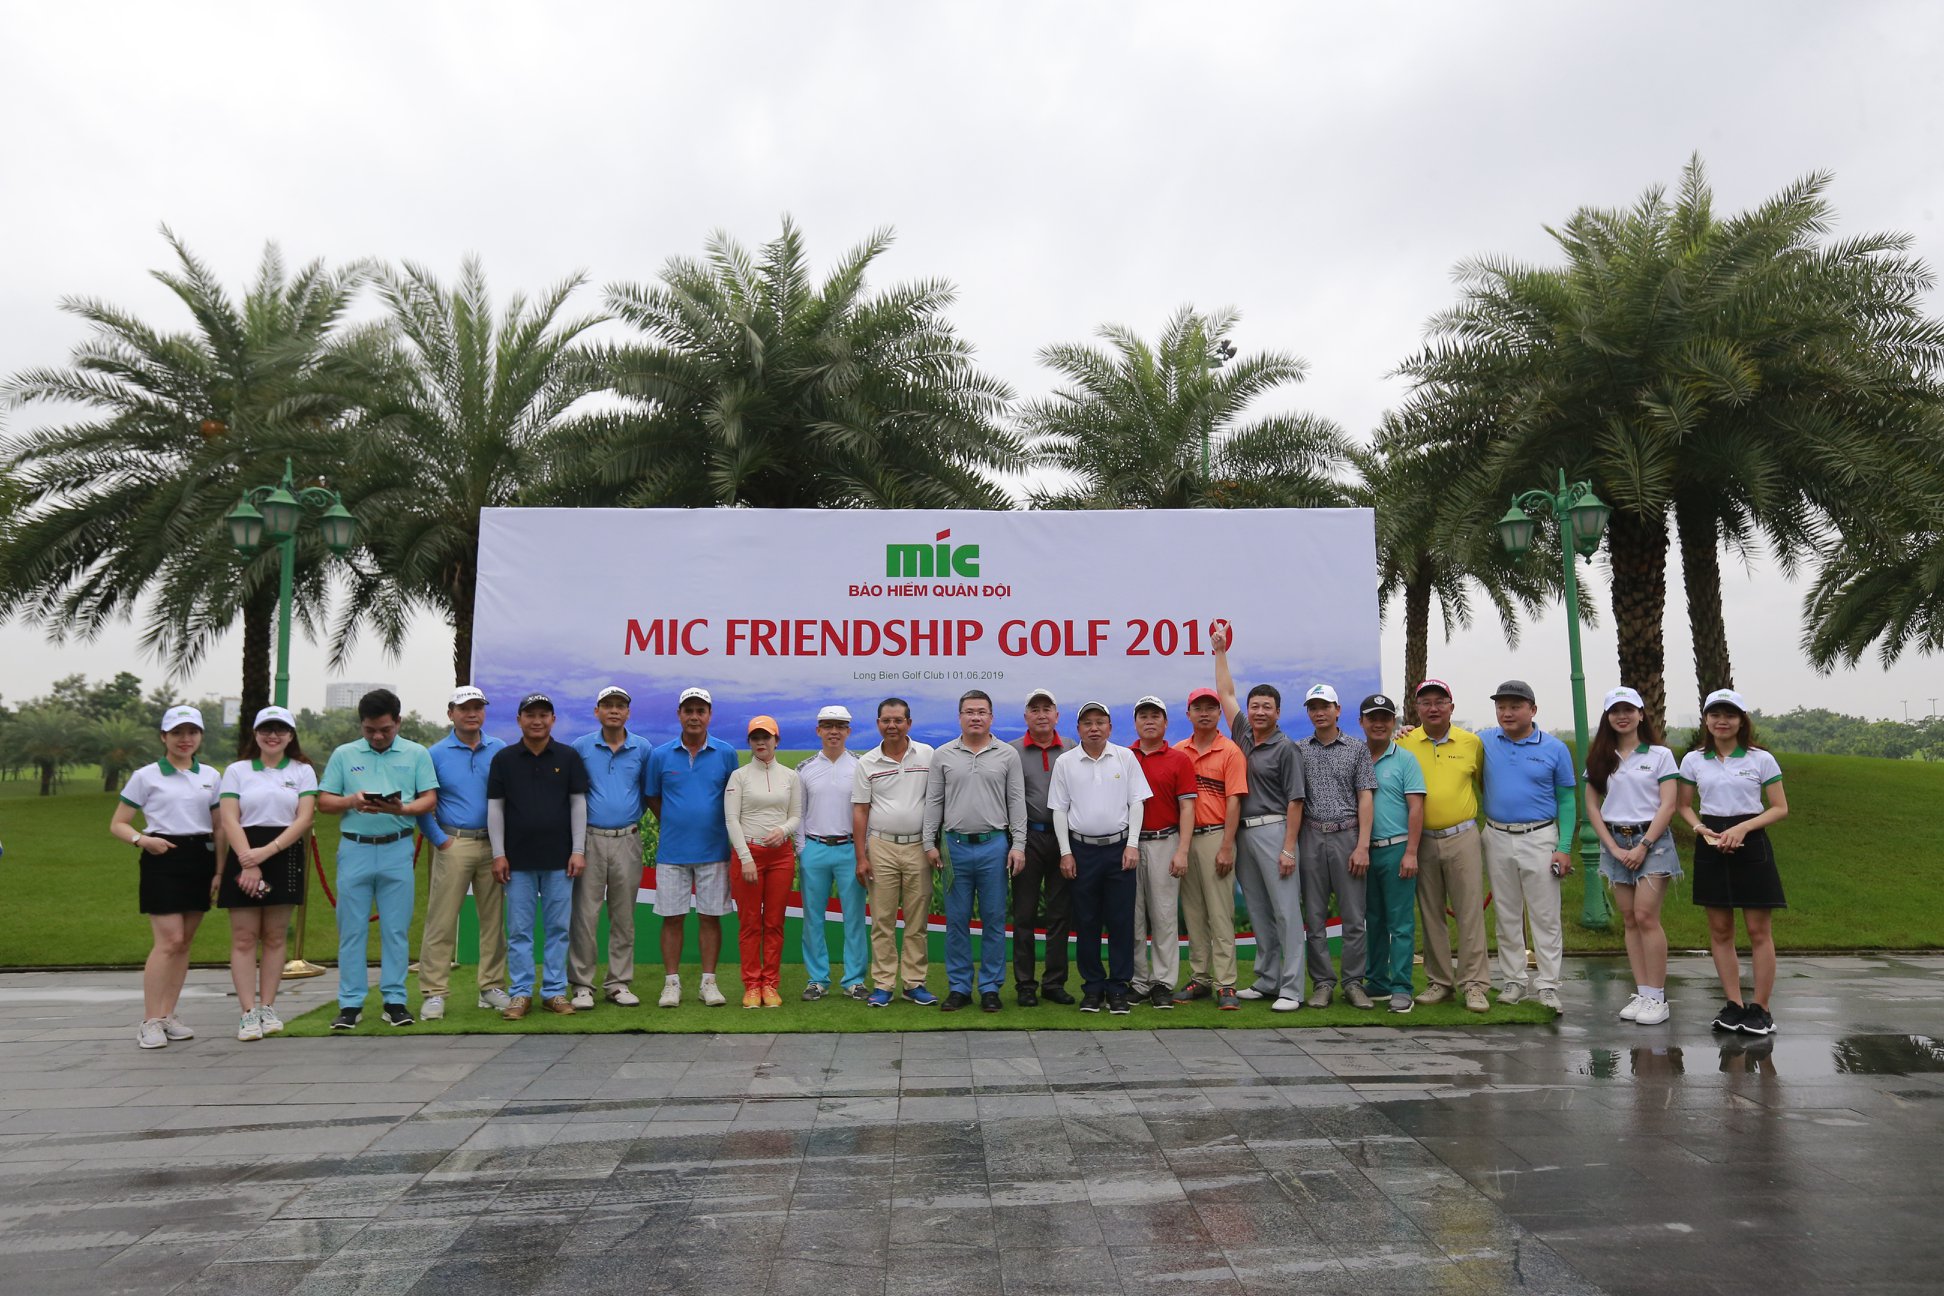 GIẢI GOLF MIC FRIENDSHIP GOLF 2019